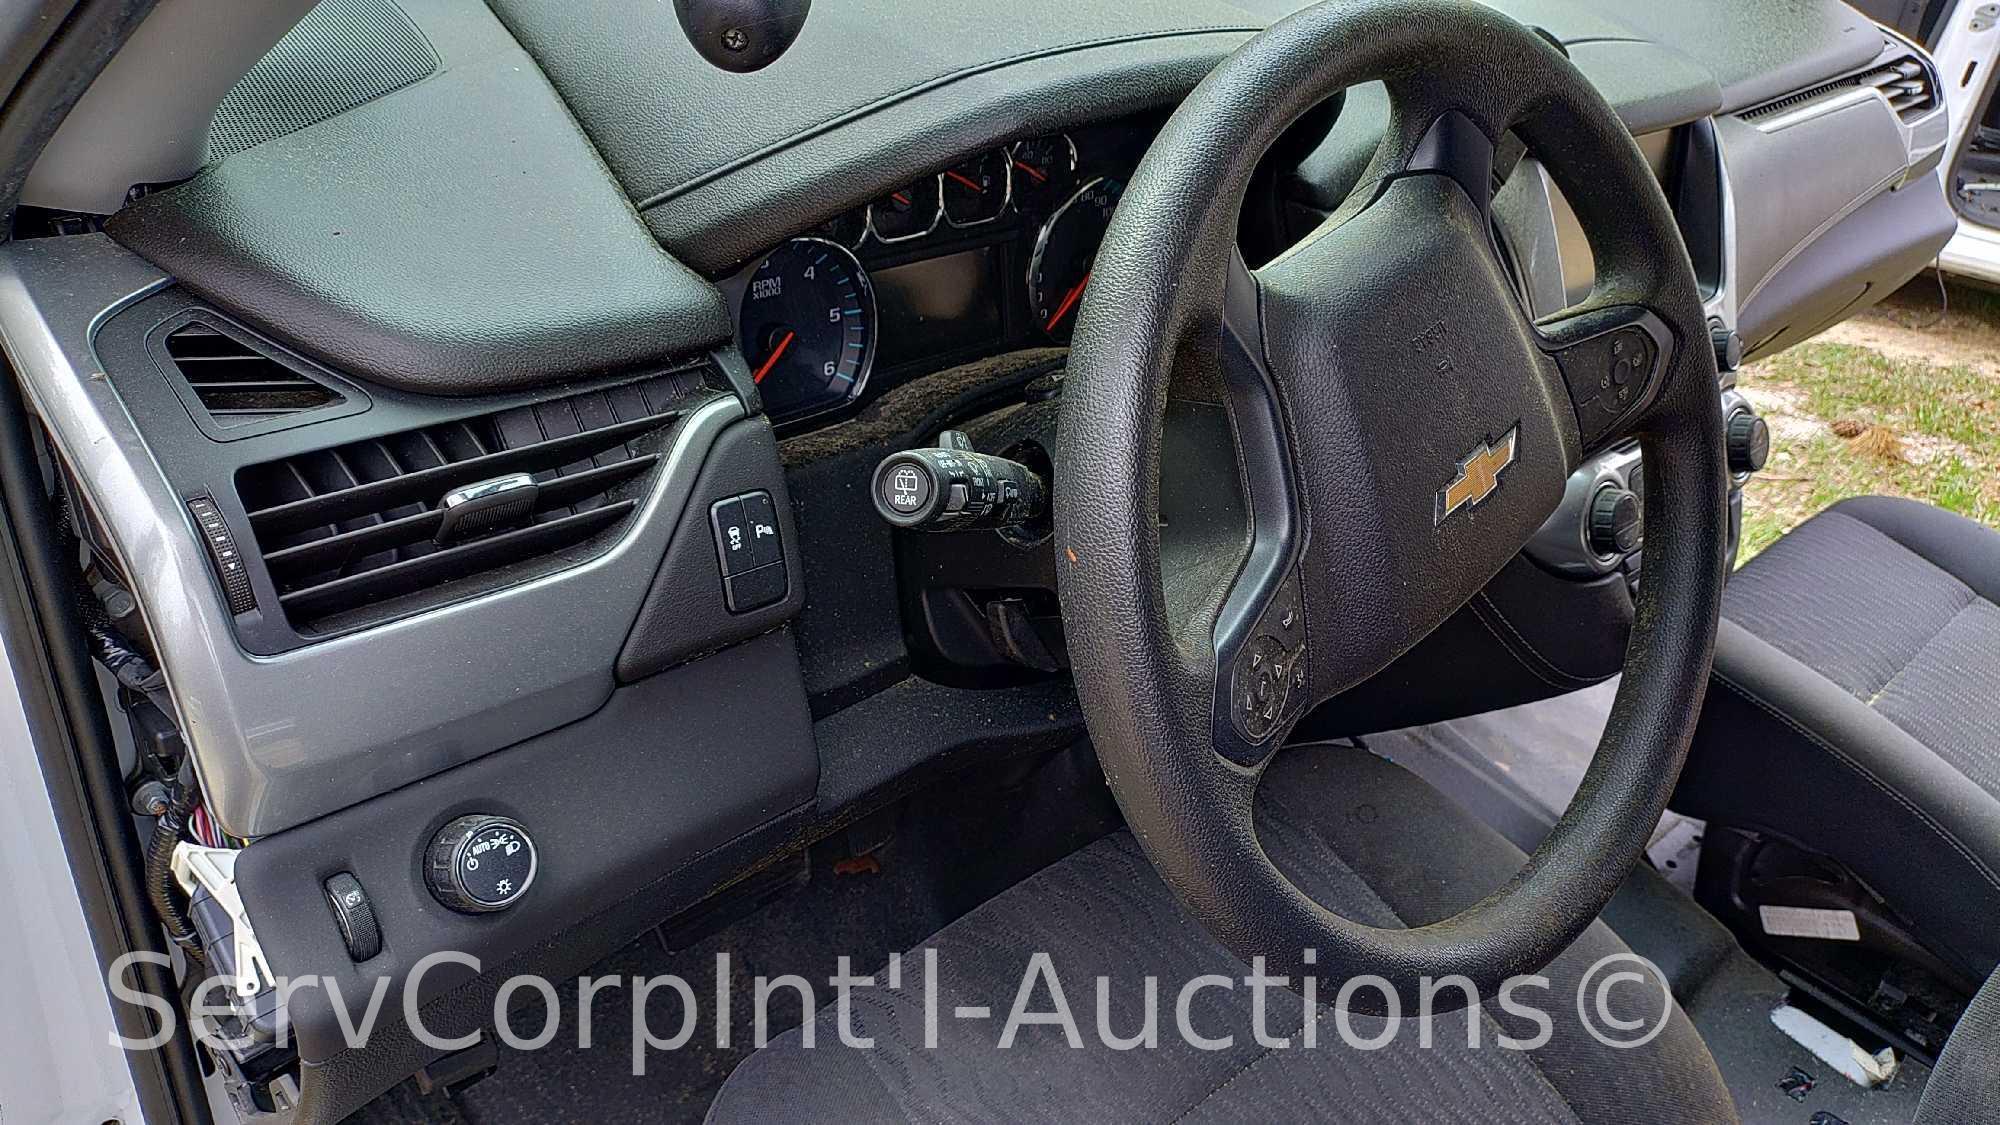 2020 Chevrolet Tahoe Multipurpose Vehicle (MPV), VIN # 1GNLCDEC3LR299487 'PARTS ONLY'